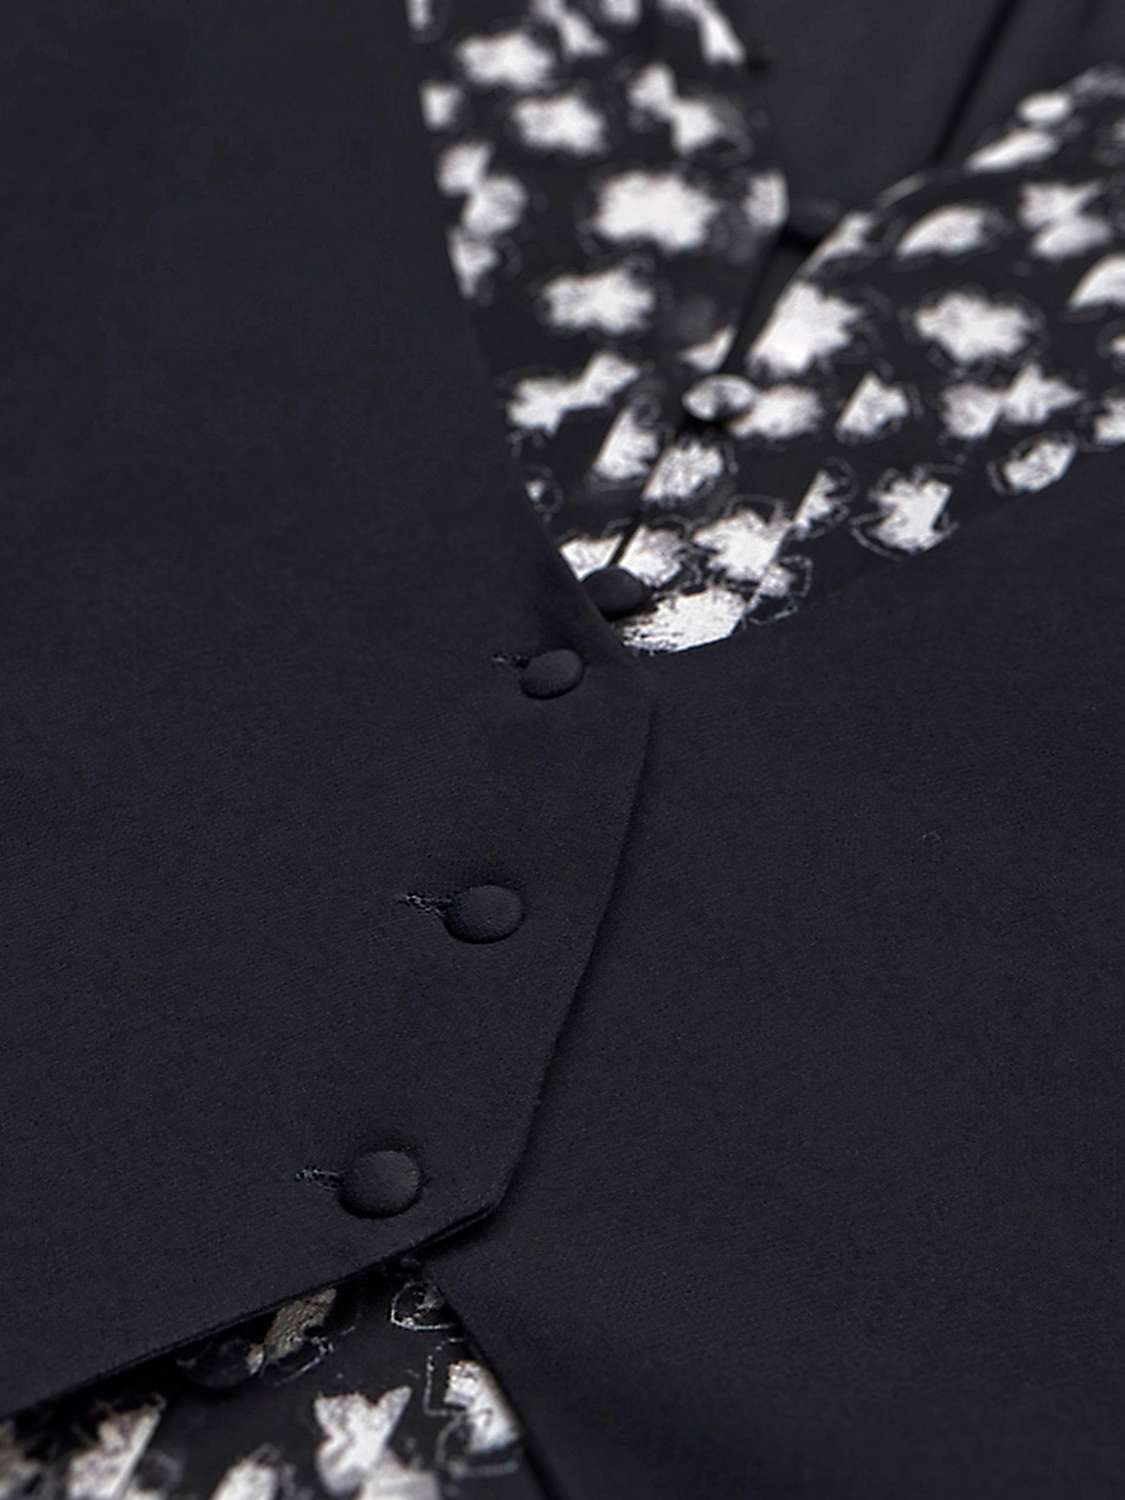 Buy Mint Velvet Tiered Waistcoat Mini Dress, Black/Multi Online at johnlewis.com